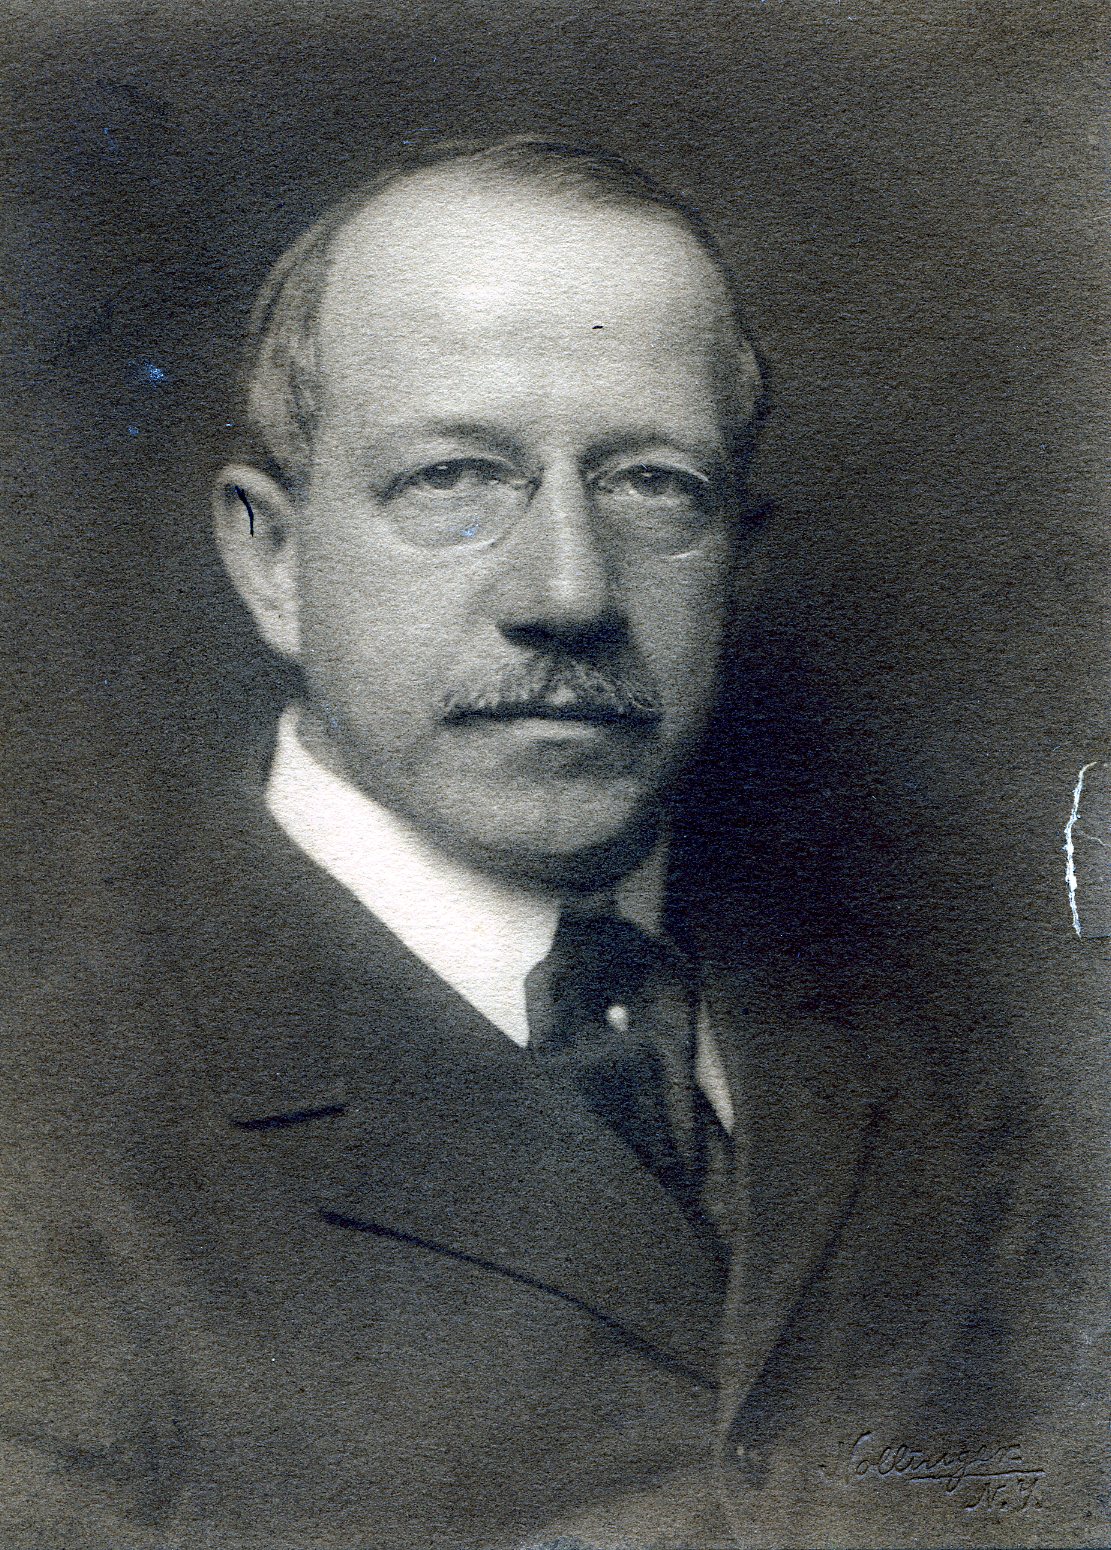 Member portrait of Charles H. Chetwood